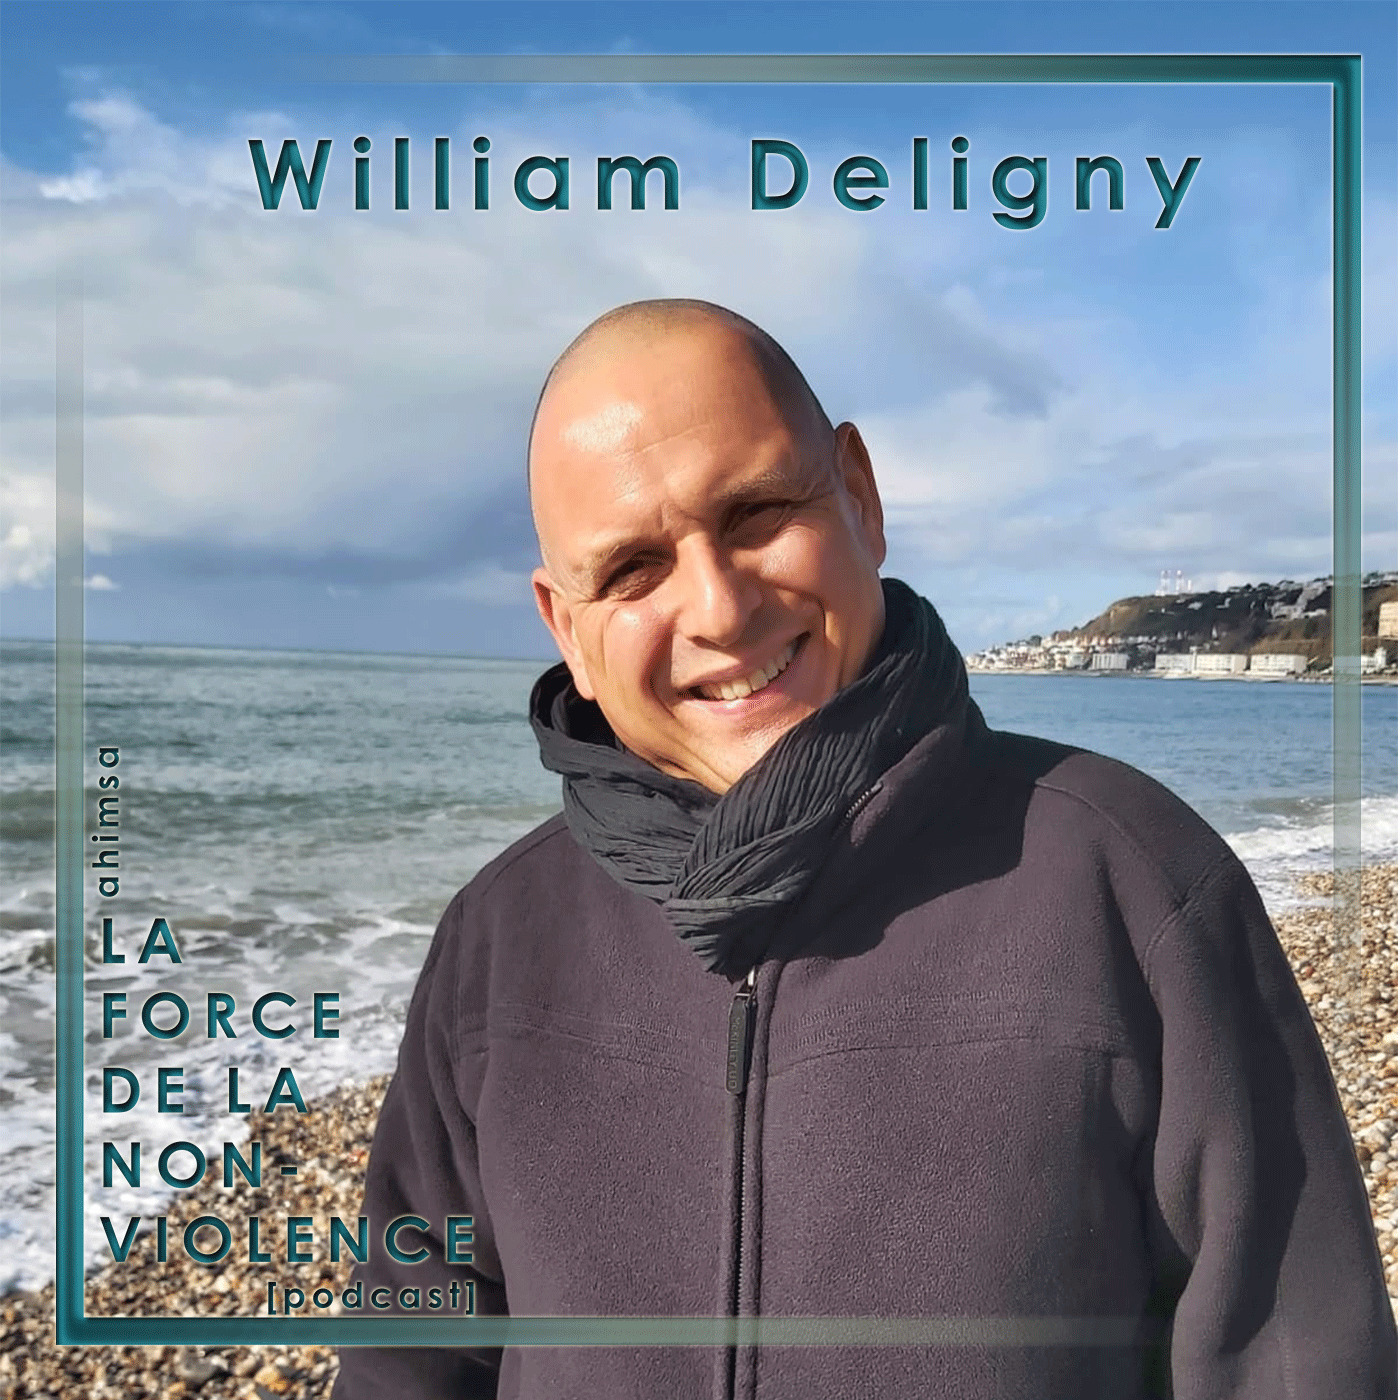 33. William Deligny